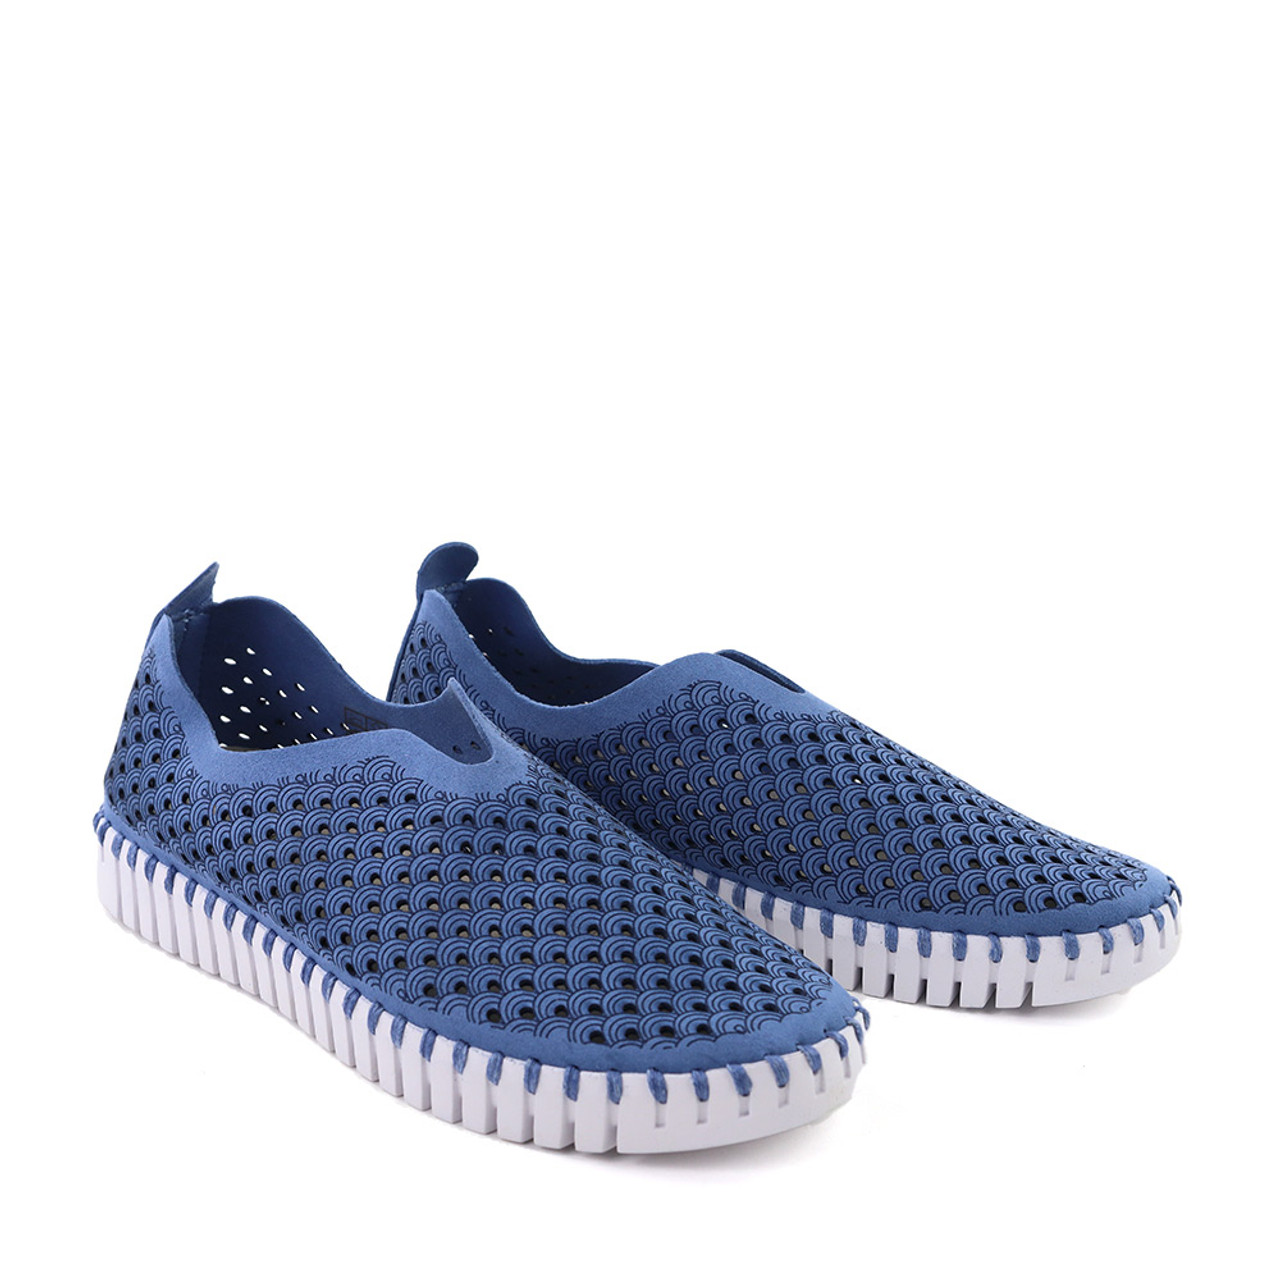 Ilse Jacobsen Tulip Light Regatta Blue | Hanig's Footwear